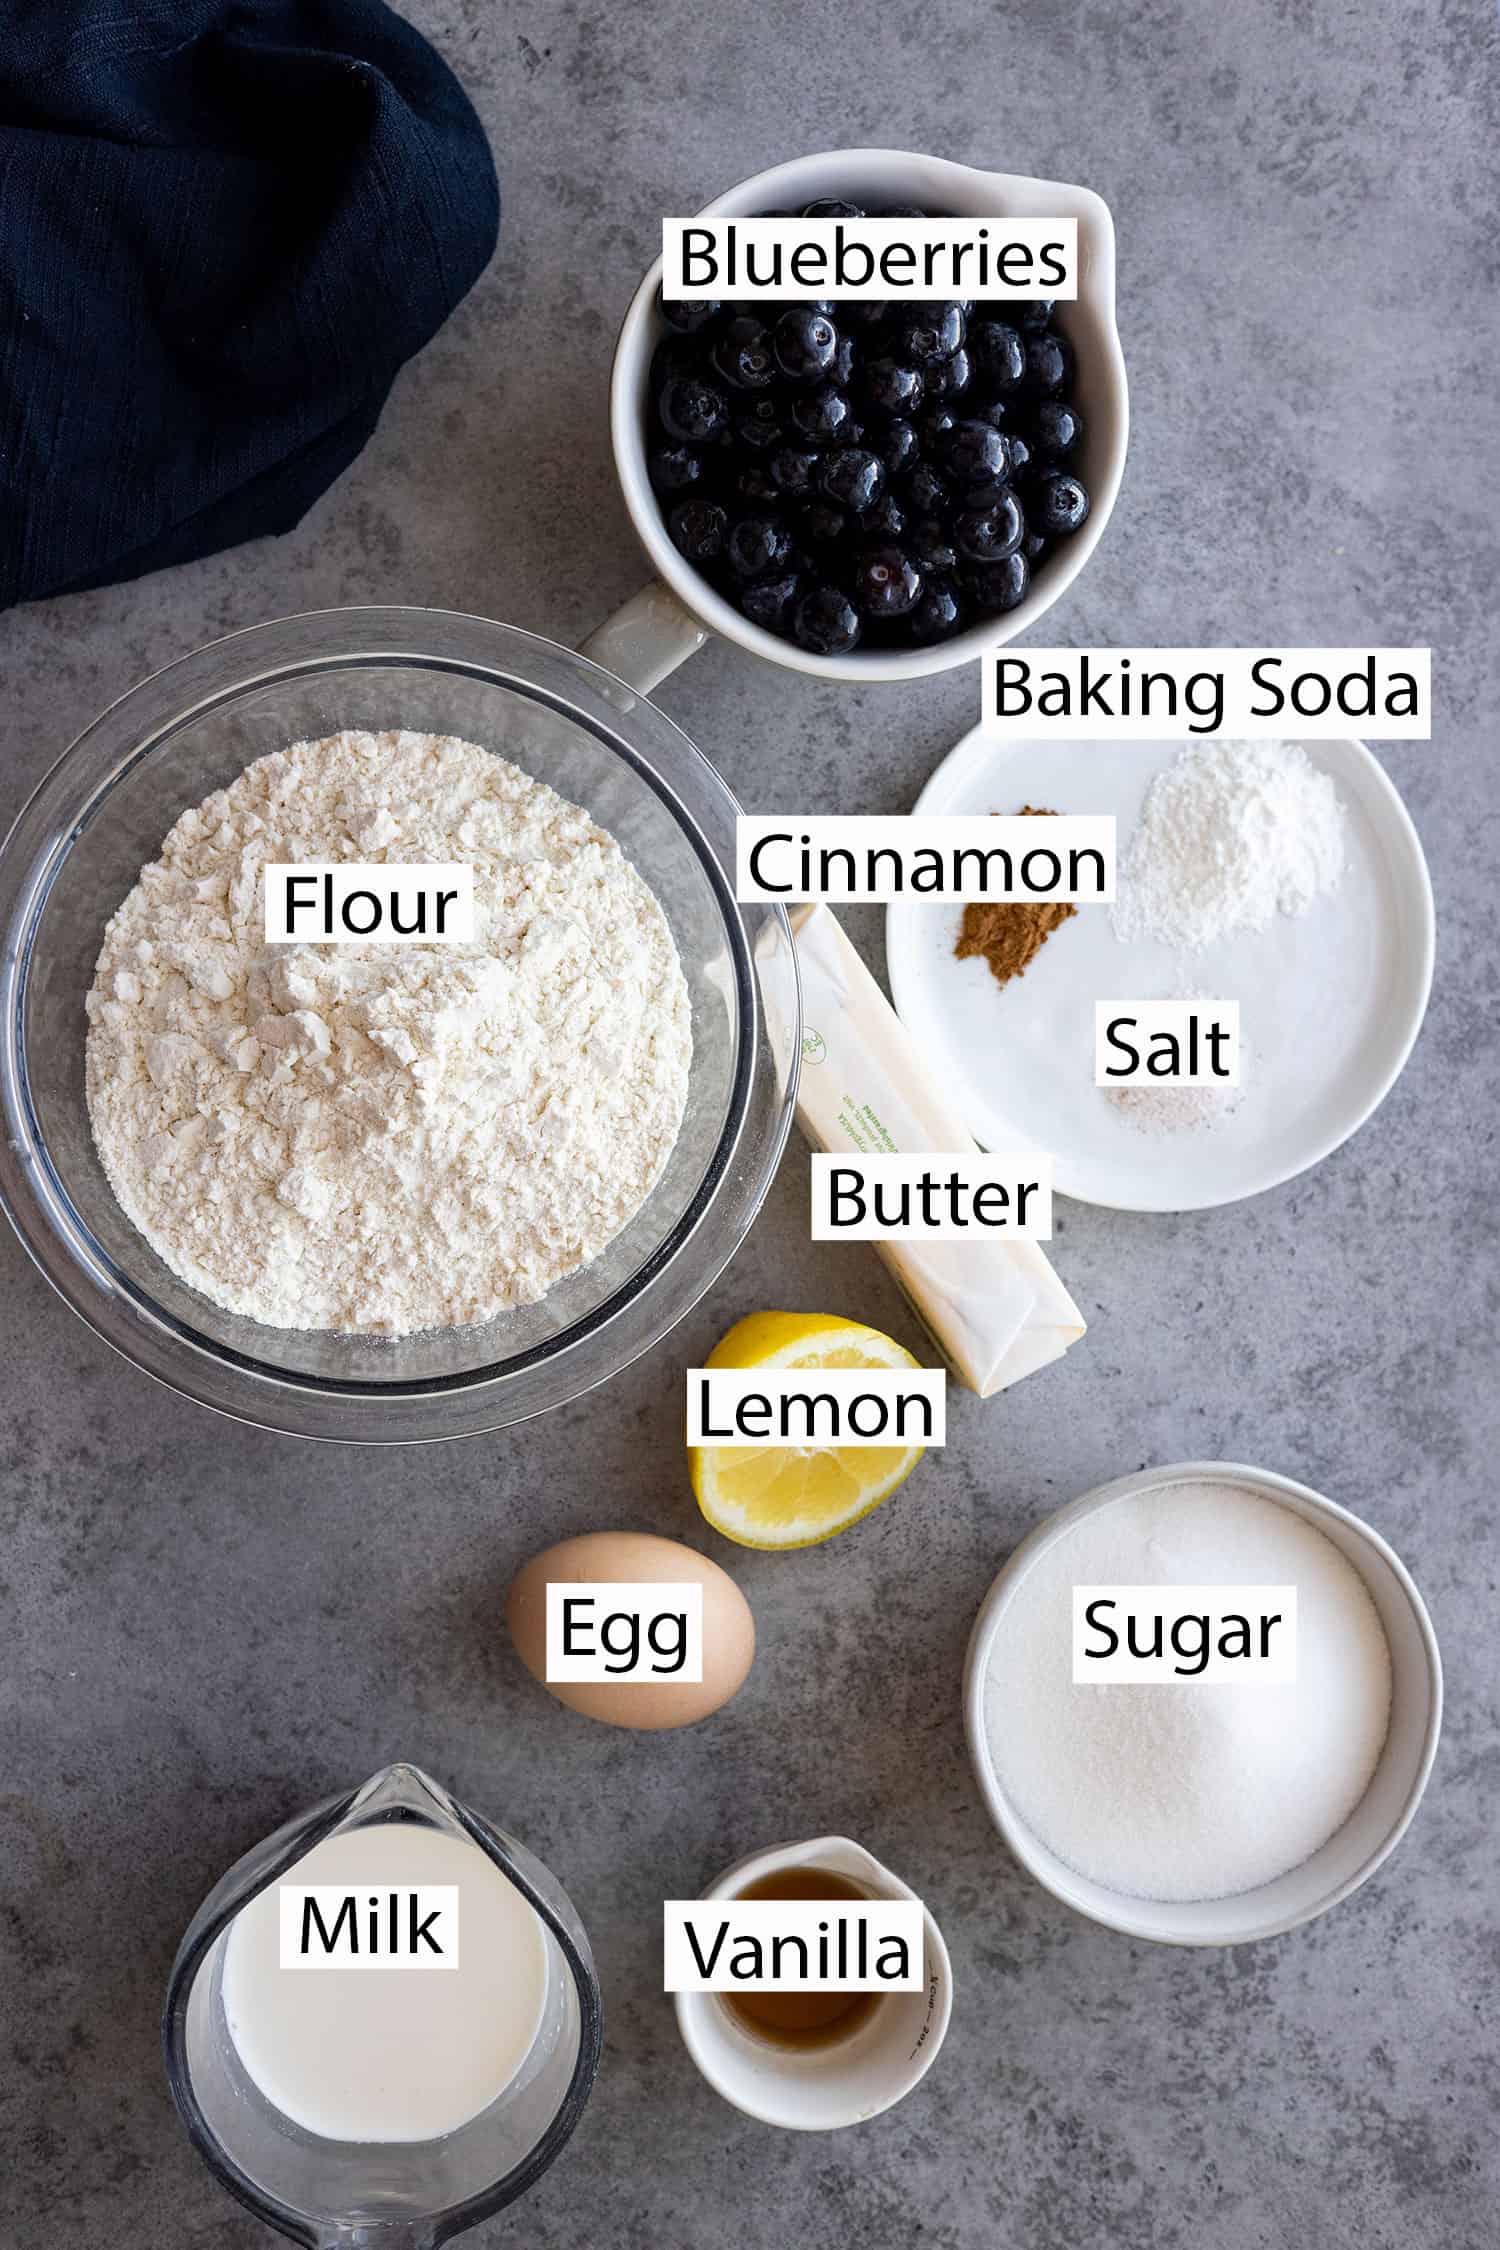 Ingredients: blueberries, flour, baking soda, cinnamon, salt, butter, lemon, egg, sugar, milk, and vanilla. 